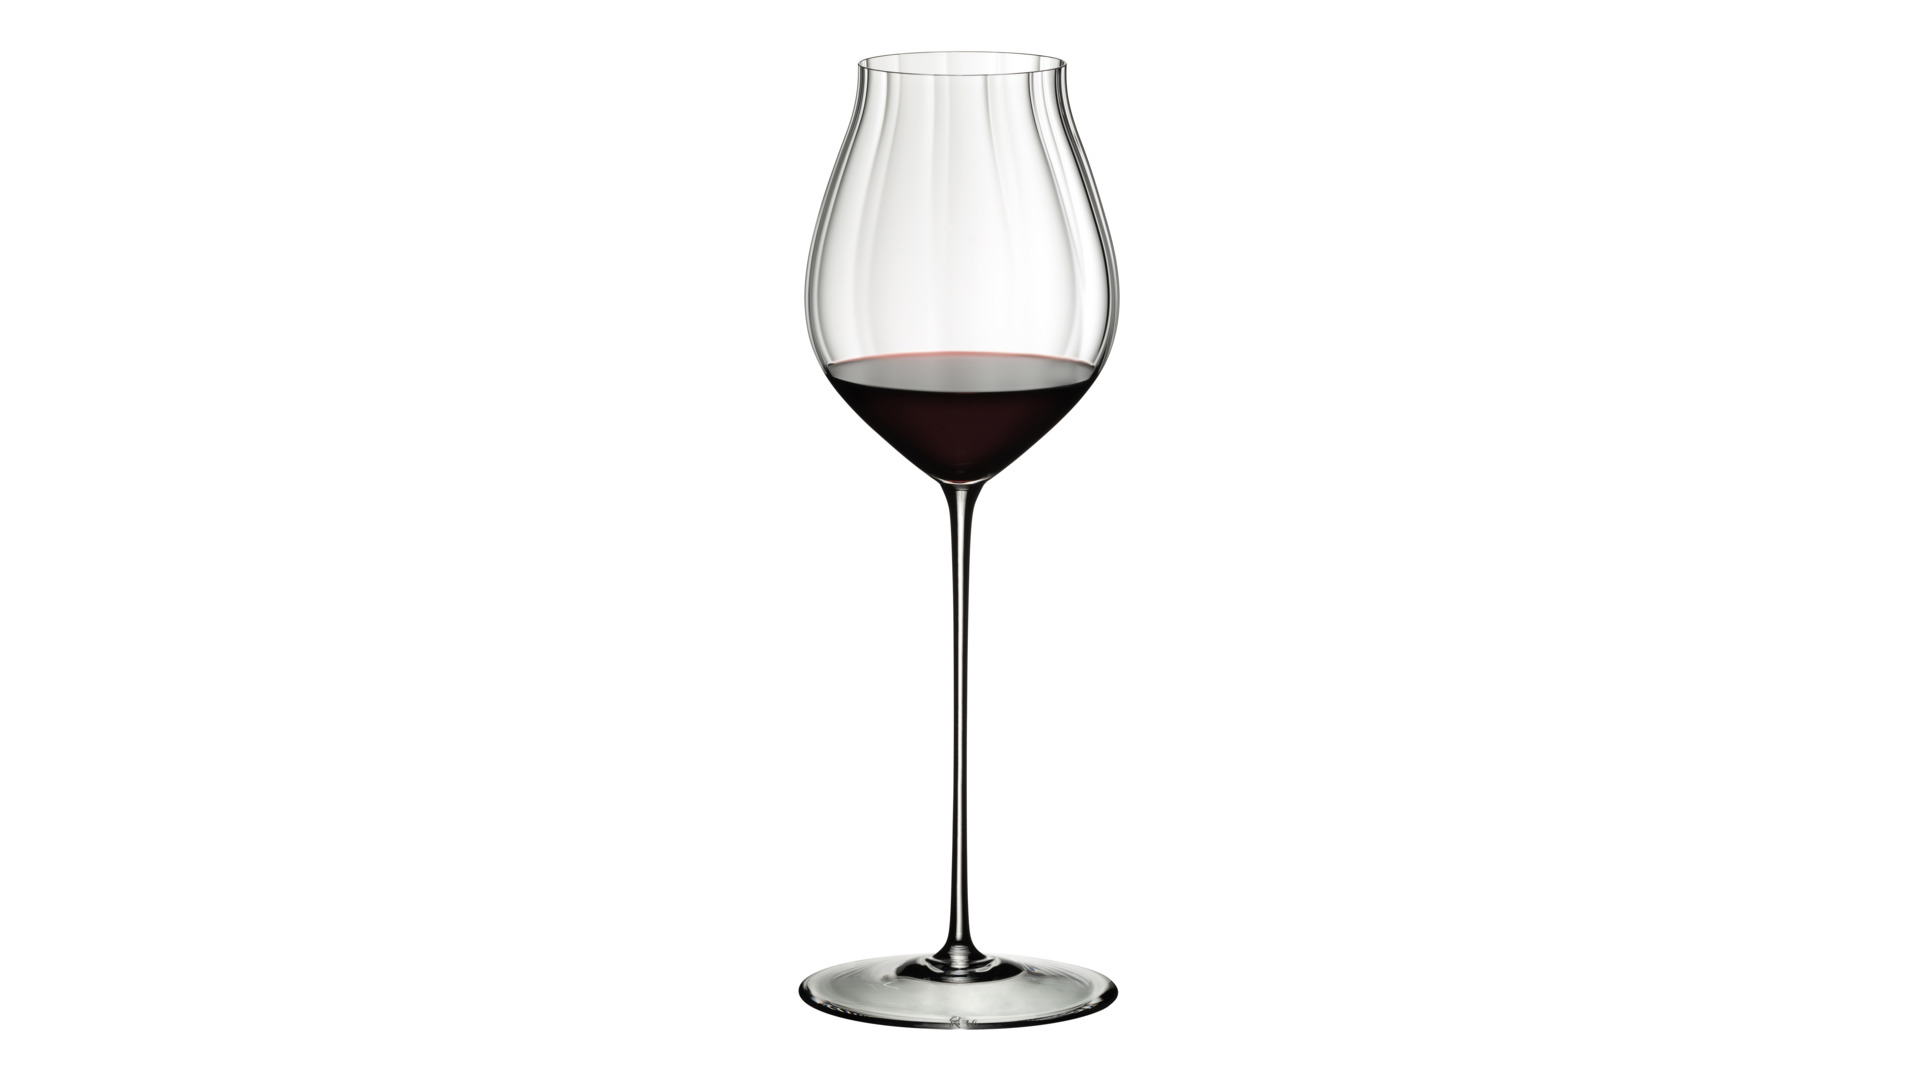 Бокал для красного вина Riedel High Performance Pinor Noir  830мл, прозрачная ножка, ручная работа